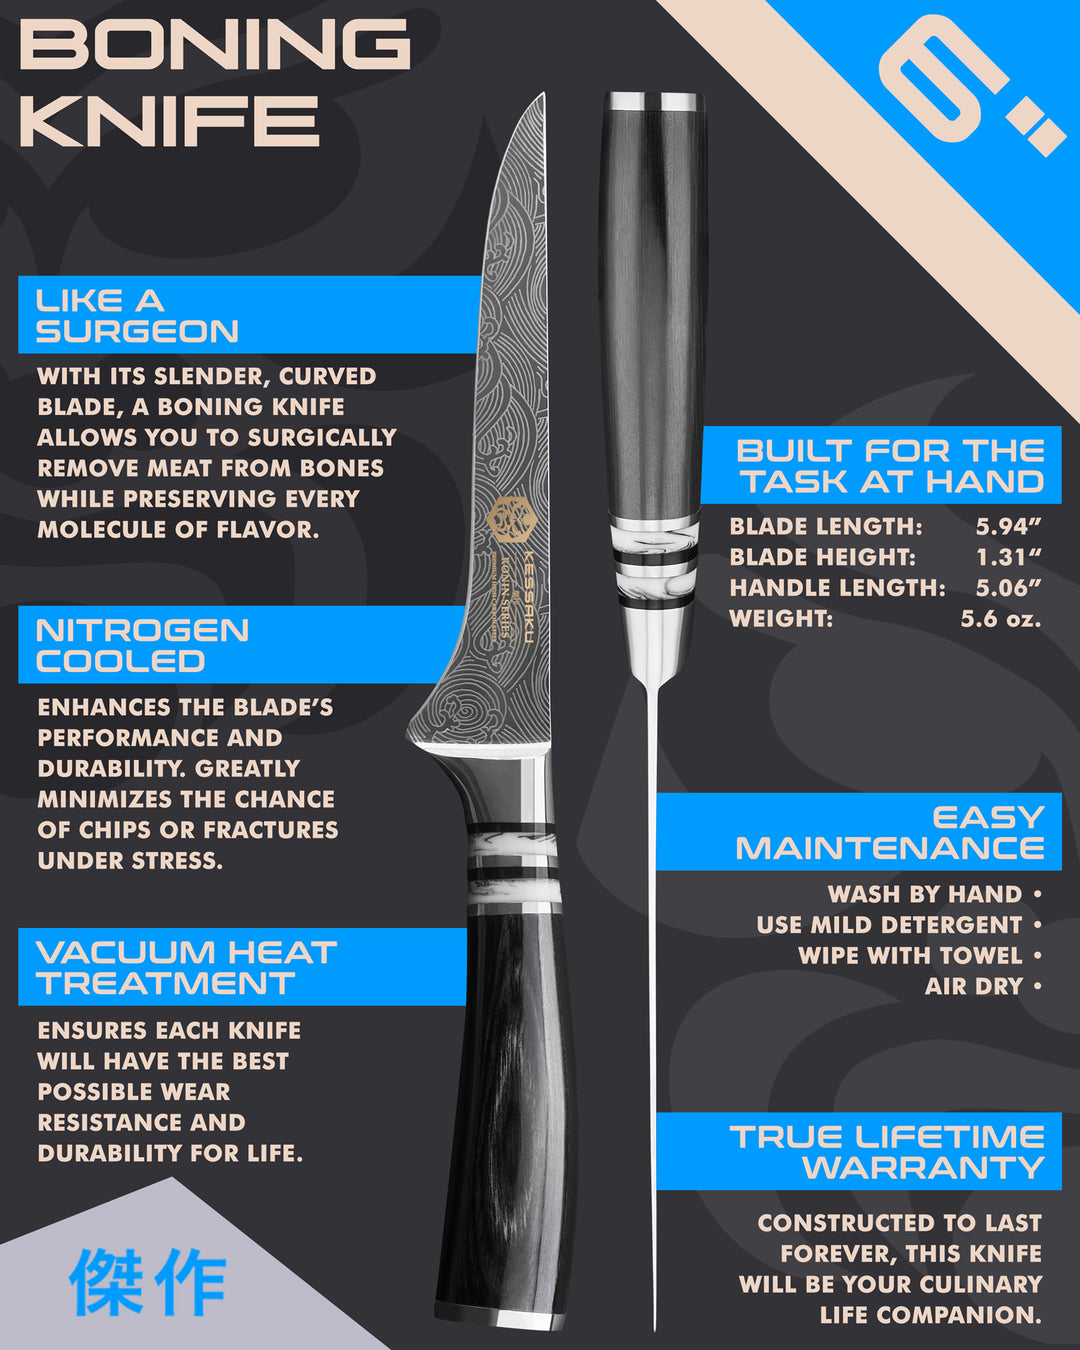 Kessaku Ronin Series Boning Knife uses, dimensions, maintenance, warranty info, and additional blade treatments